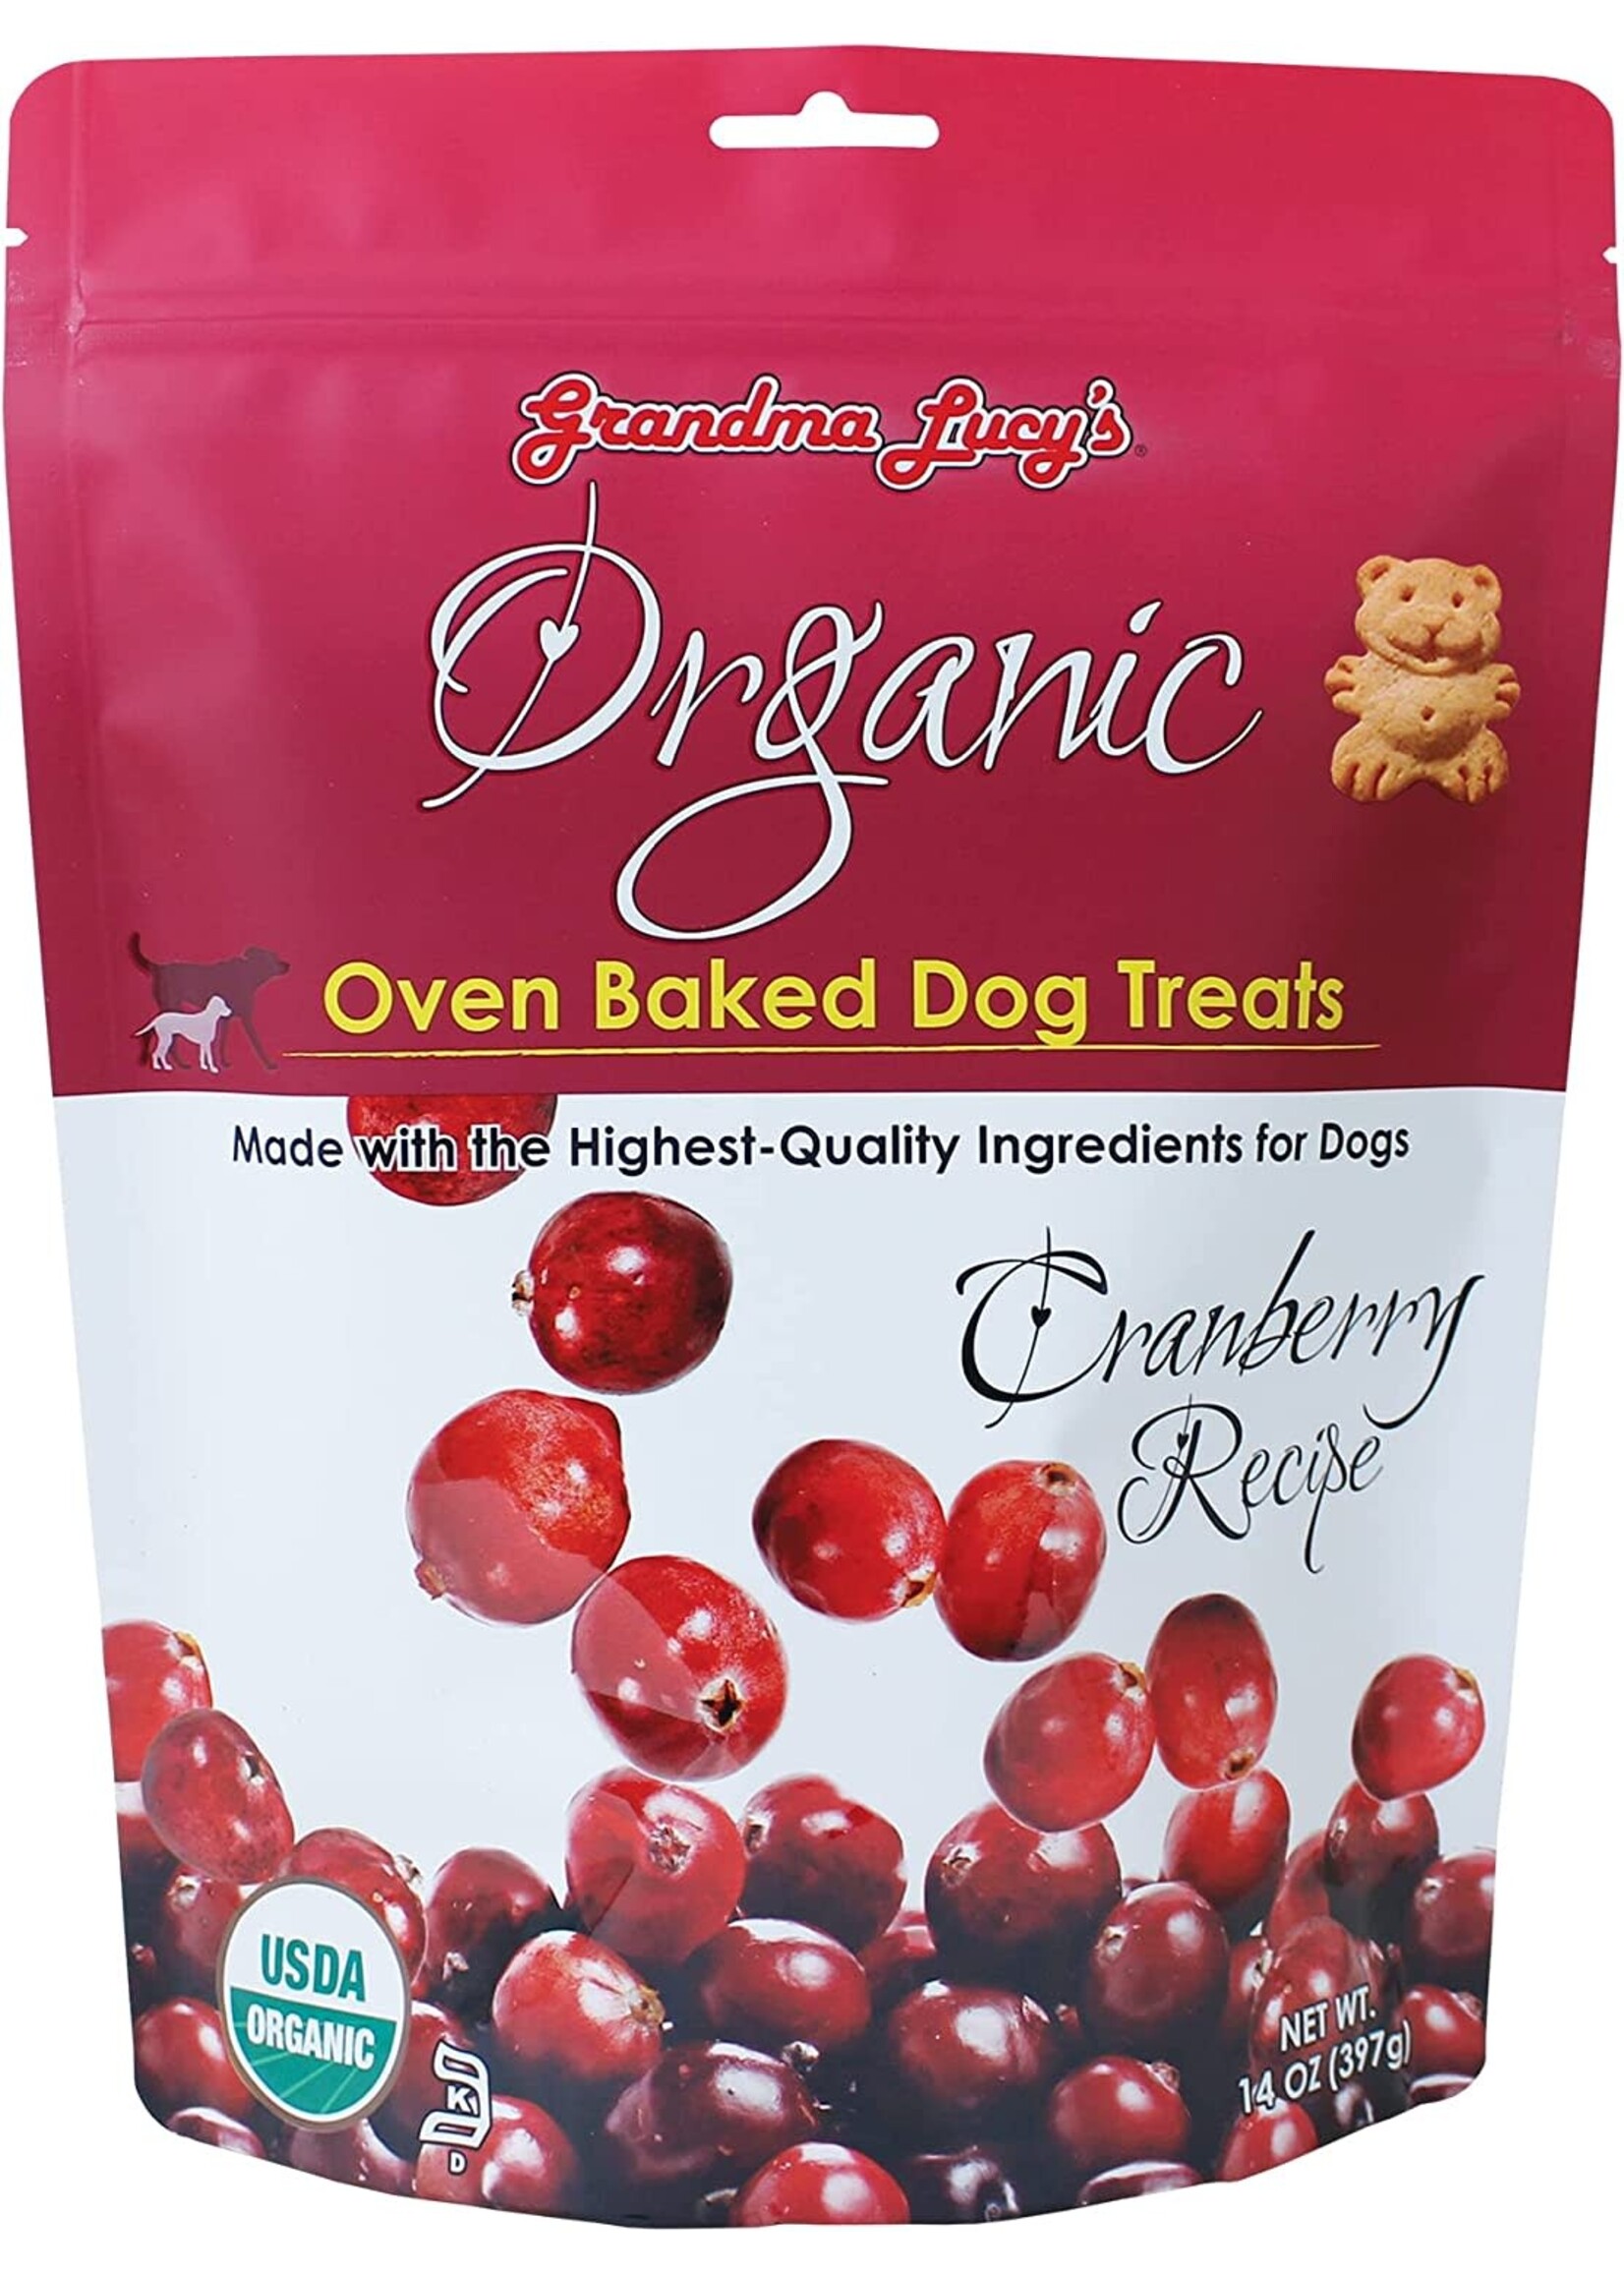 Grandma Lucy's Organic Oven Baked Dog Treats Cranberry Recipe 14 oz